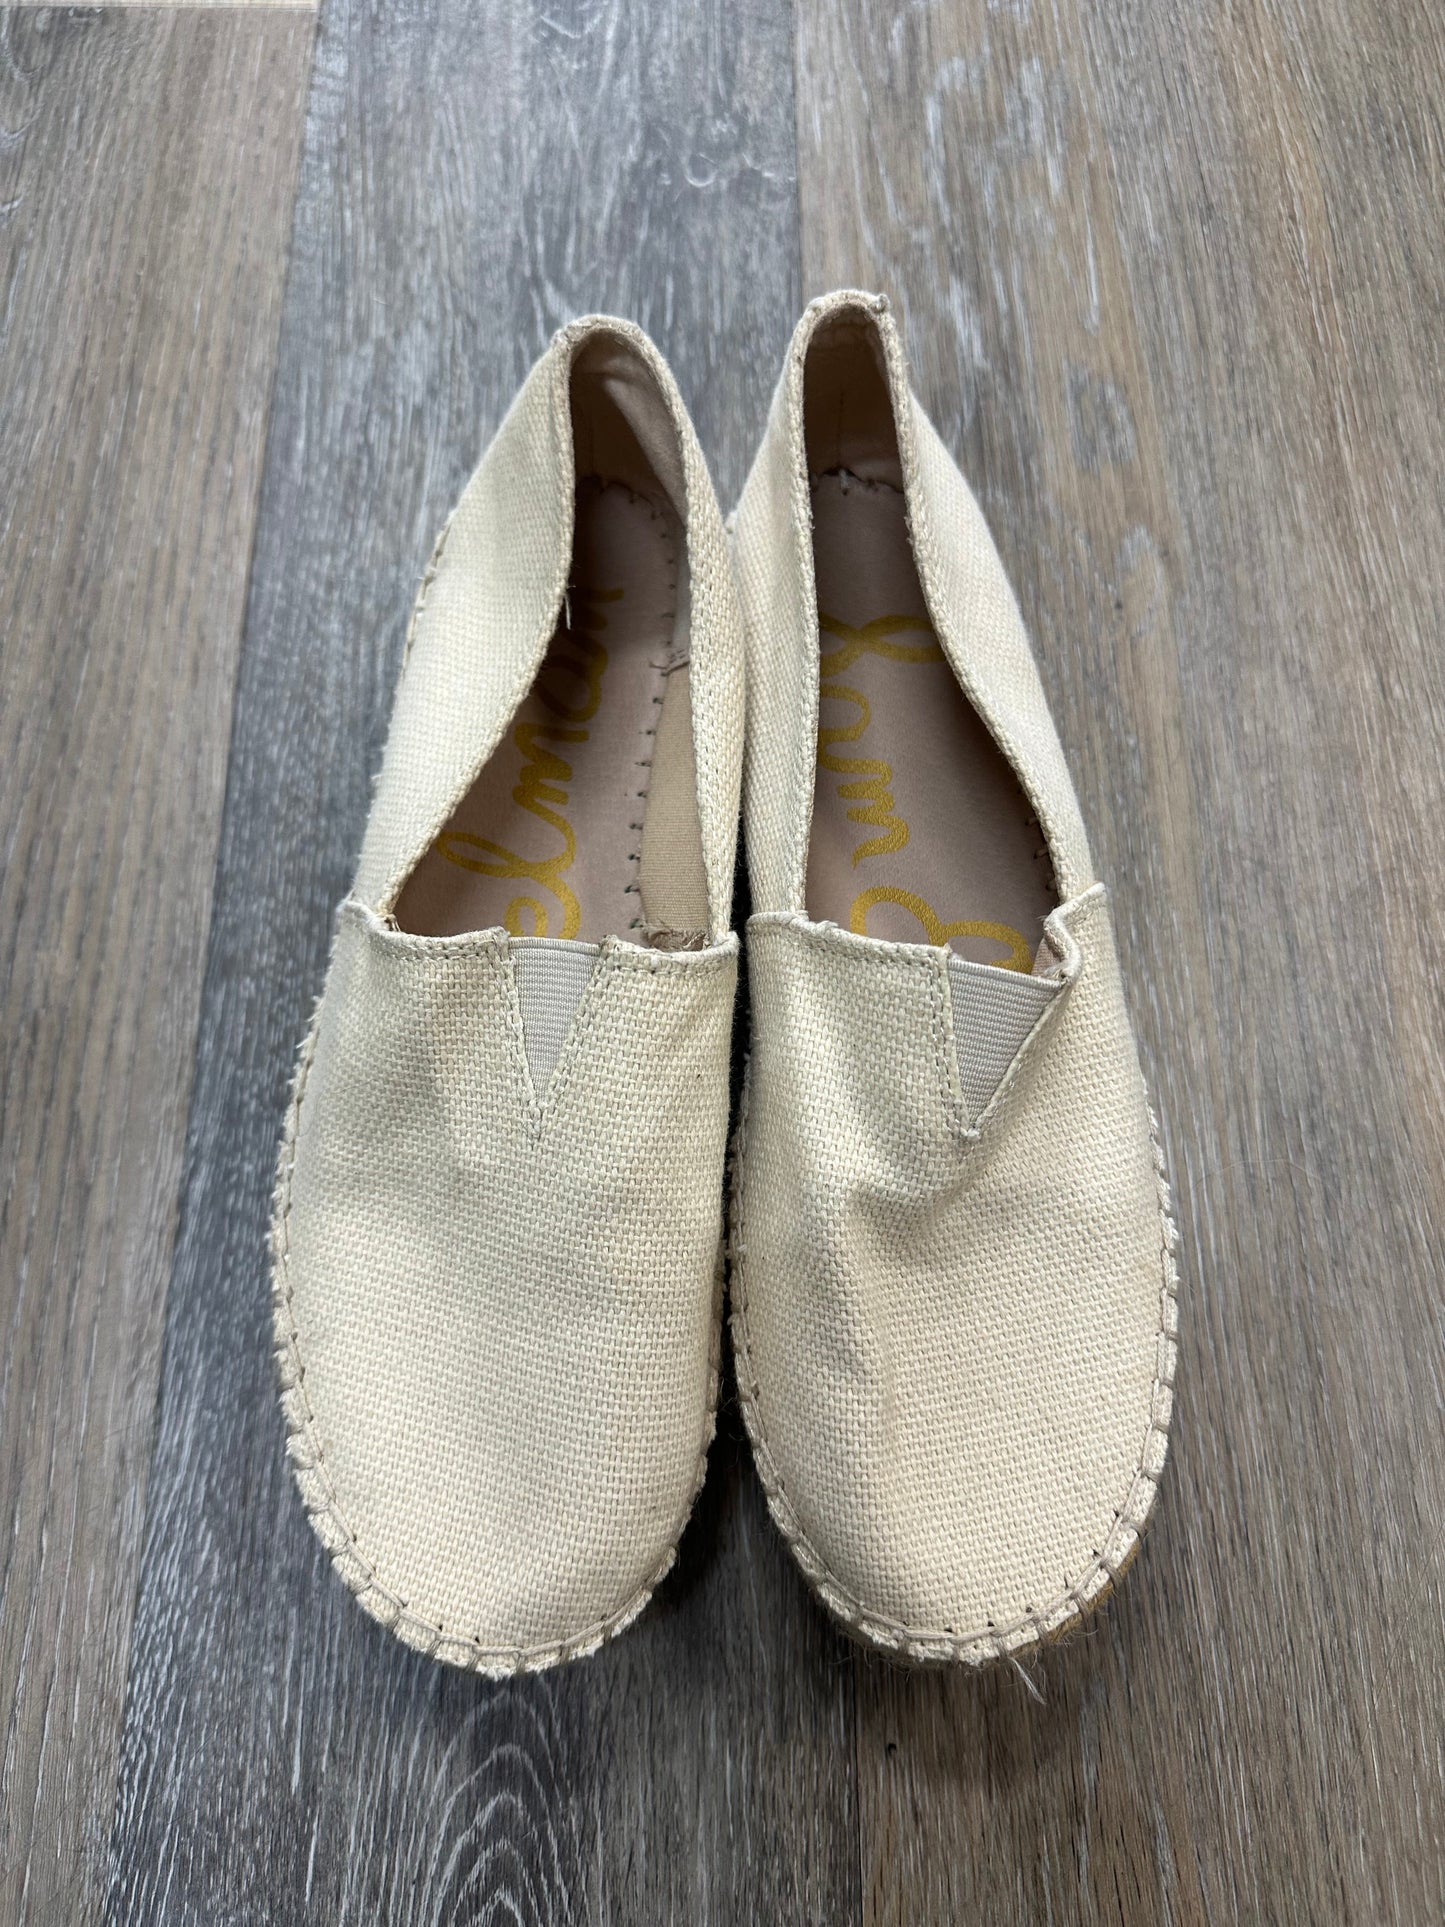 Cream Shoes Flats Sam Edelman, Size 9.5